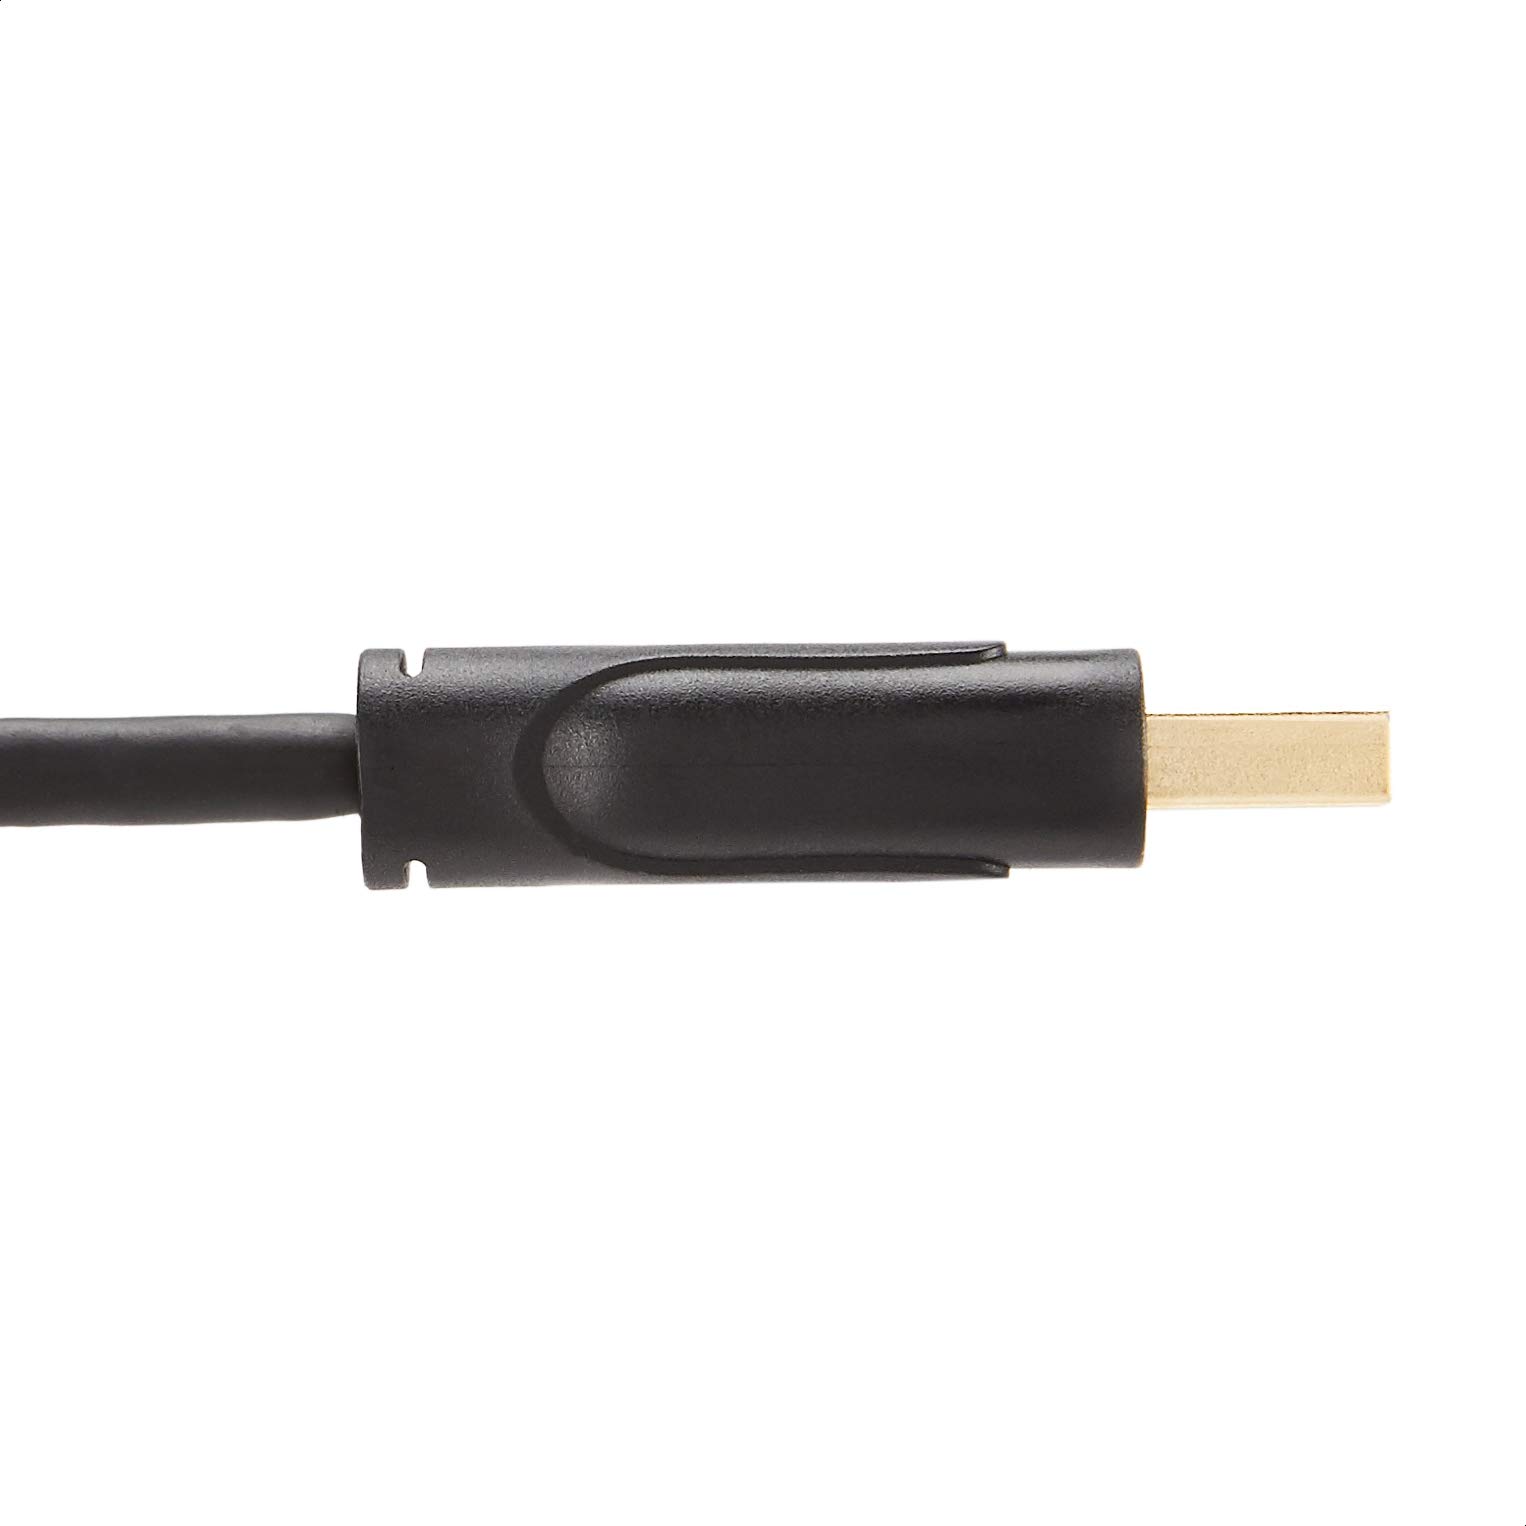 Amazon Basics DisplayPort to DisplayPort HD Display Cable - 6 Feet, 52 Count, Black